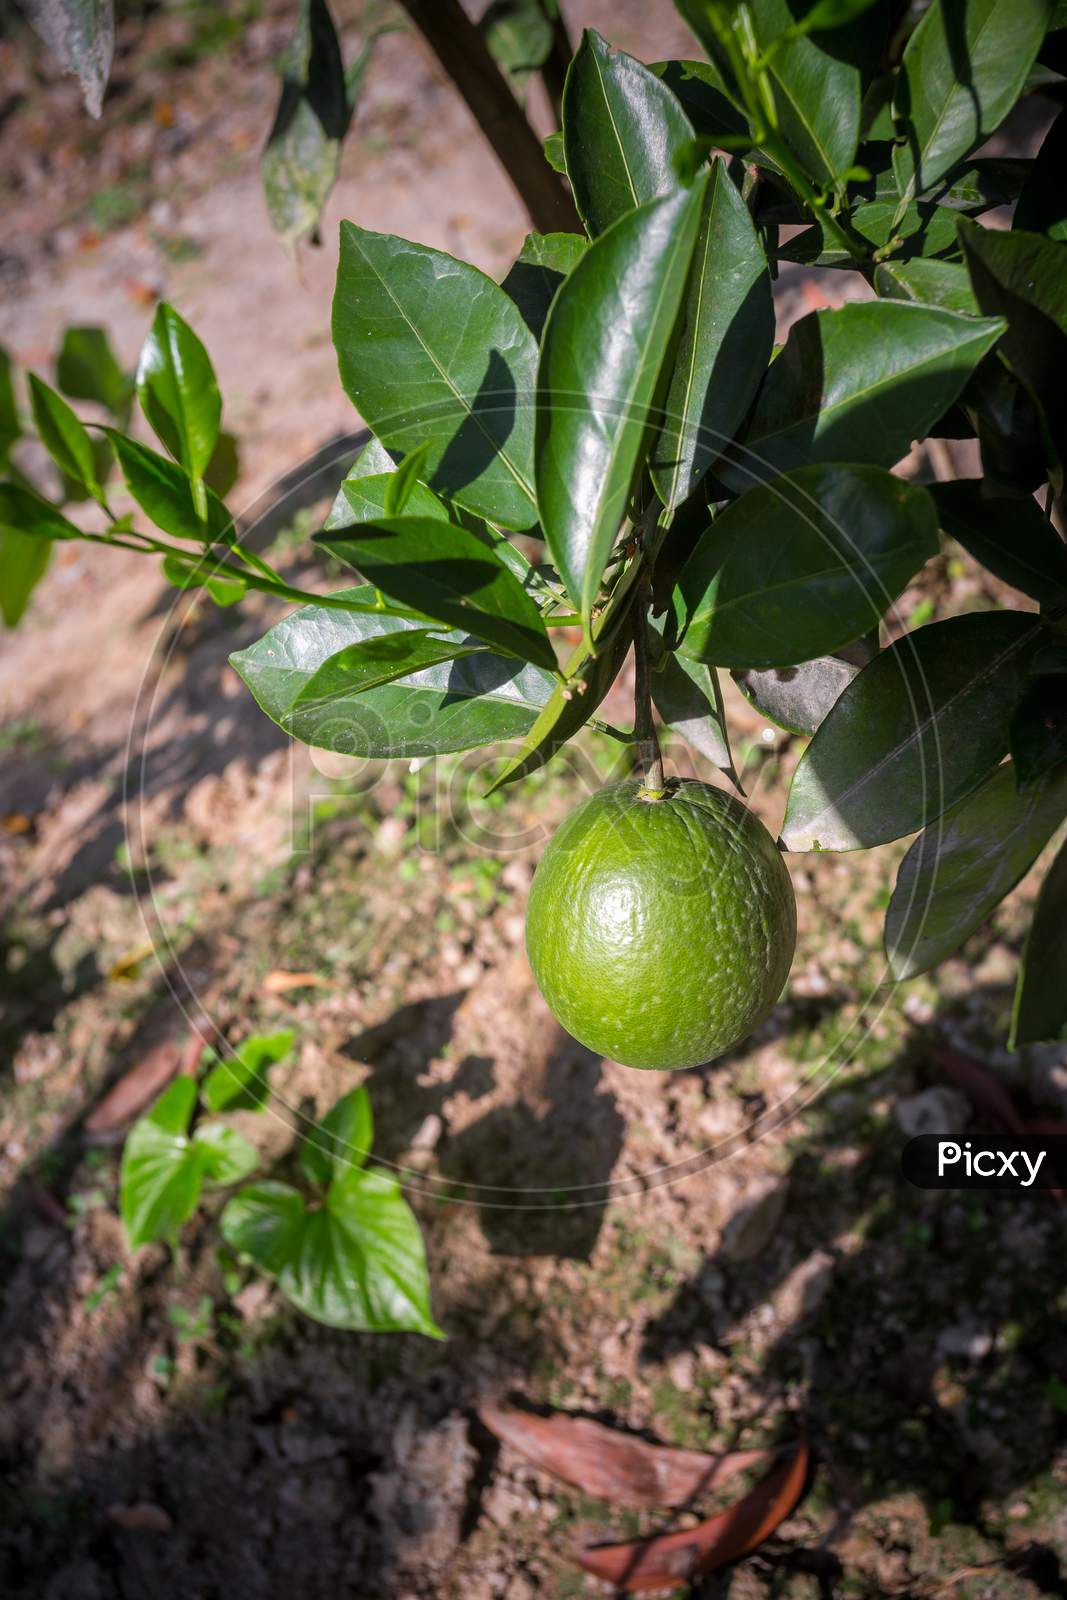 Green Malta(Citrus), Bare-1 Sweet Malta Fruit Hanging On Tree In Bangladesh.